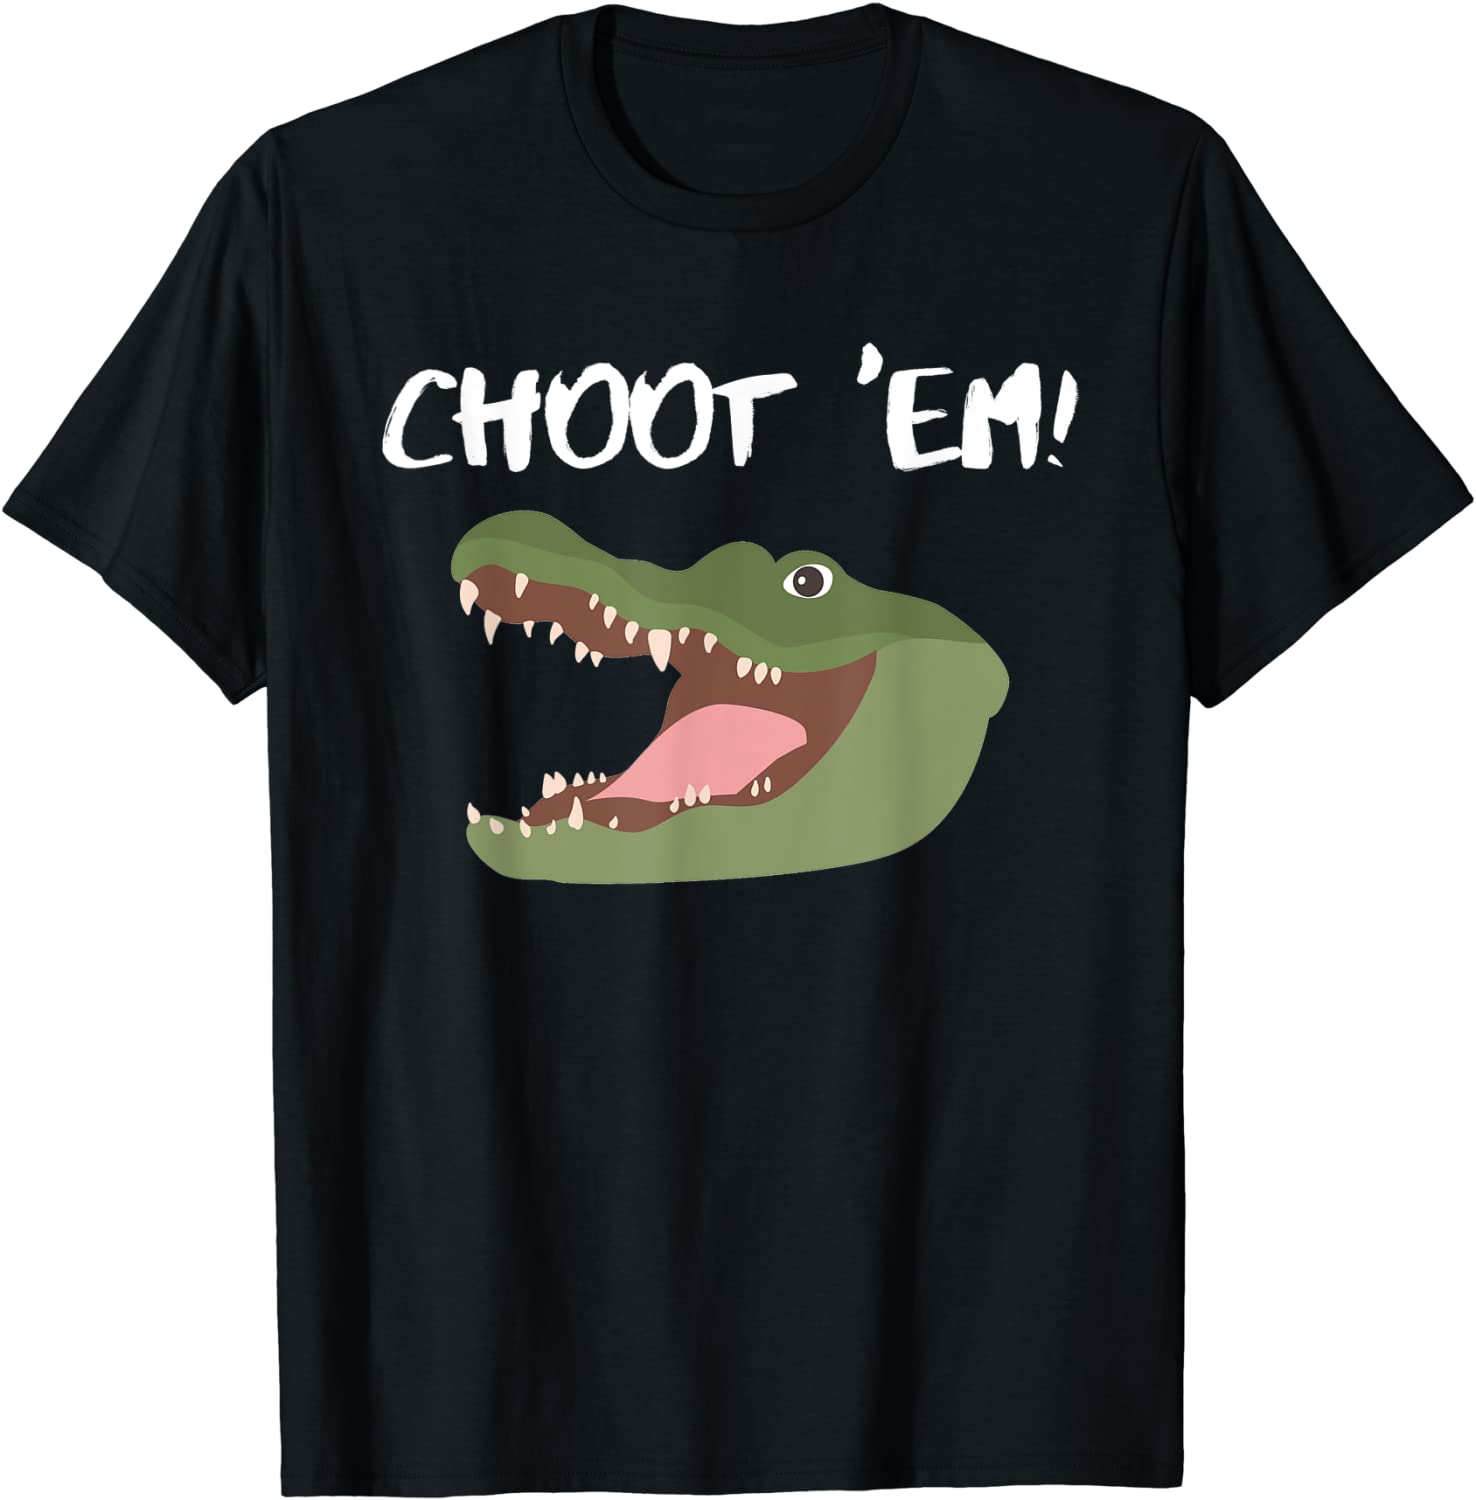 Troy Swamp Choot Em' Alligator Gator Hunting T-Shirt